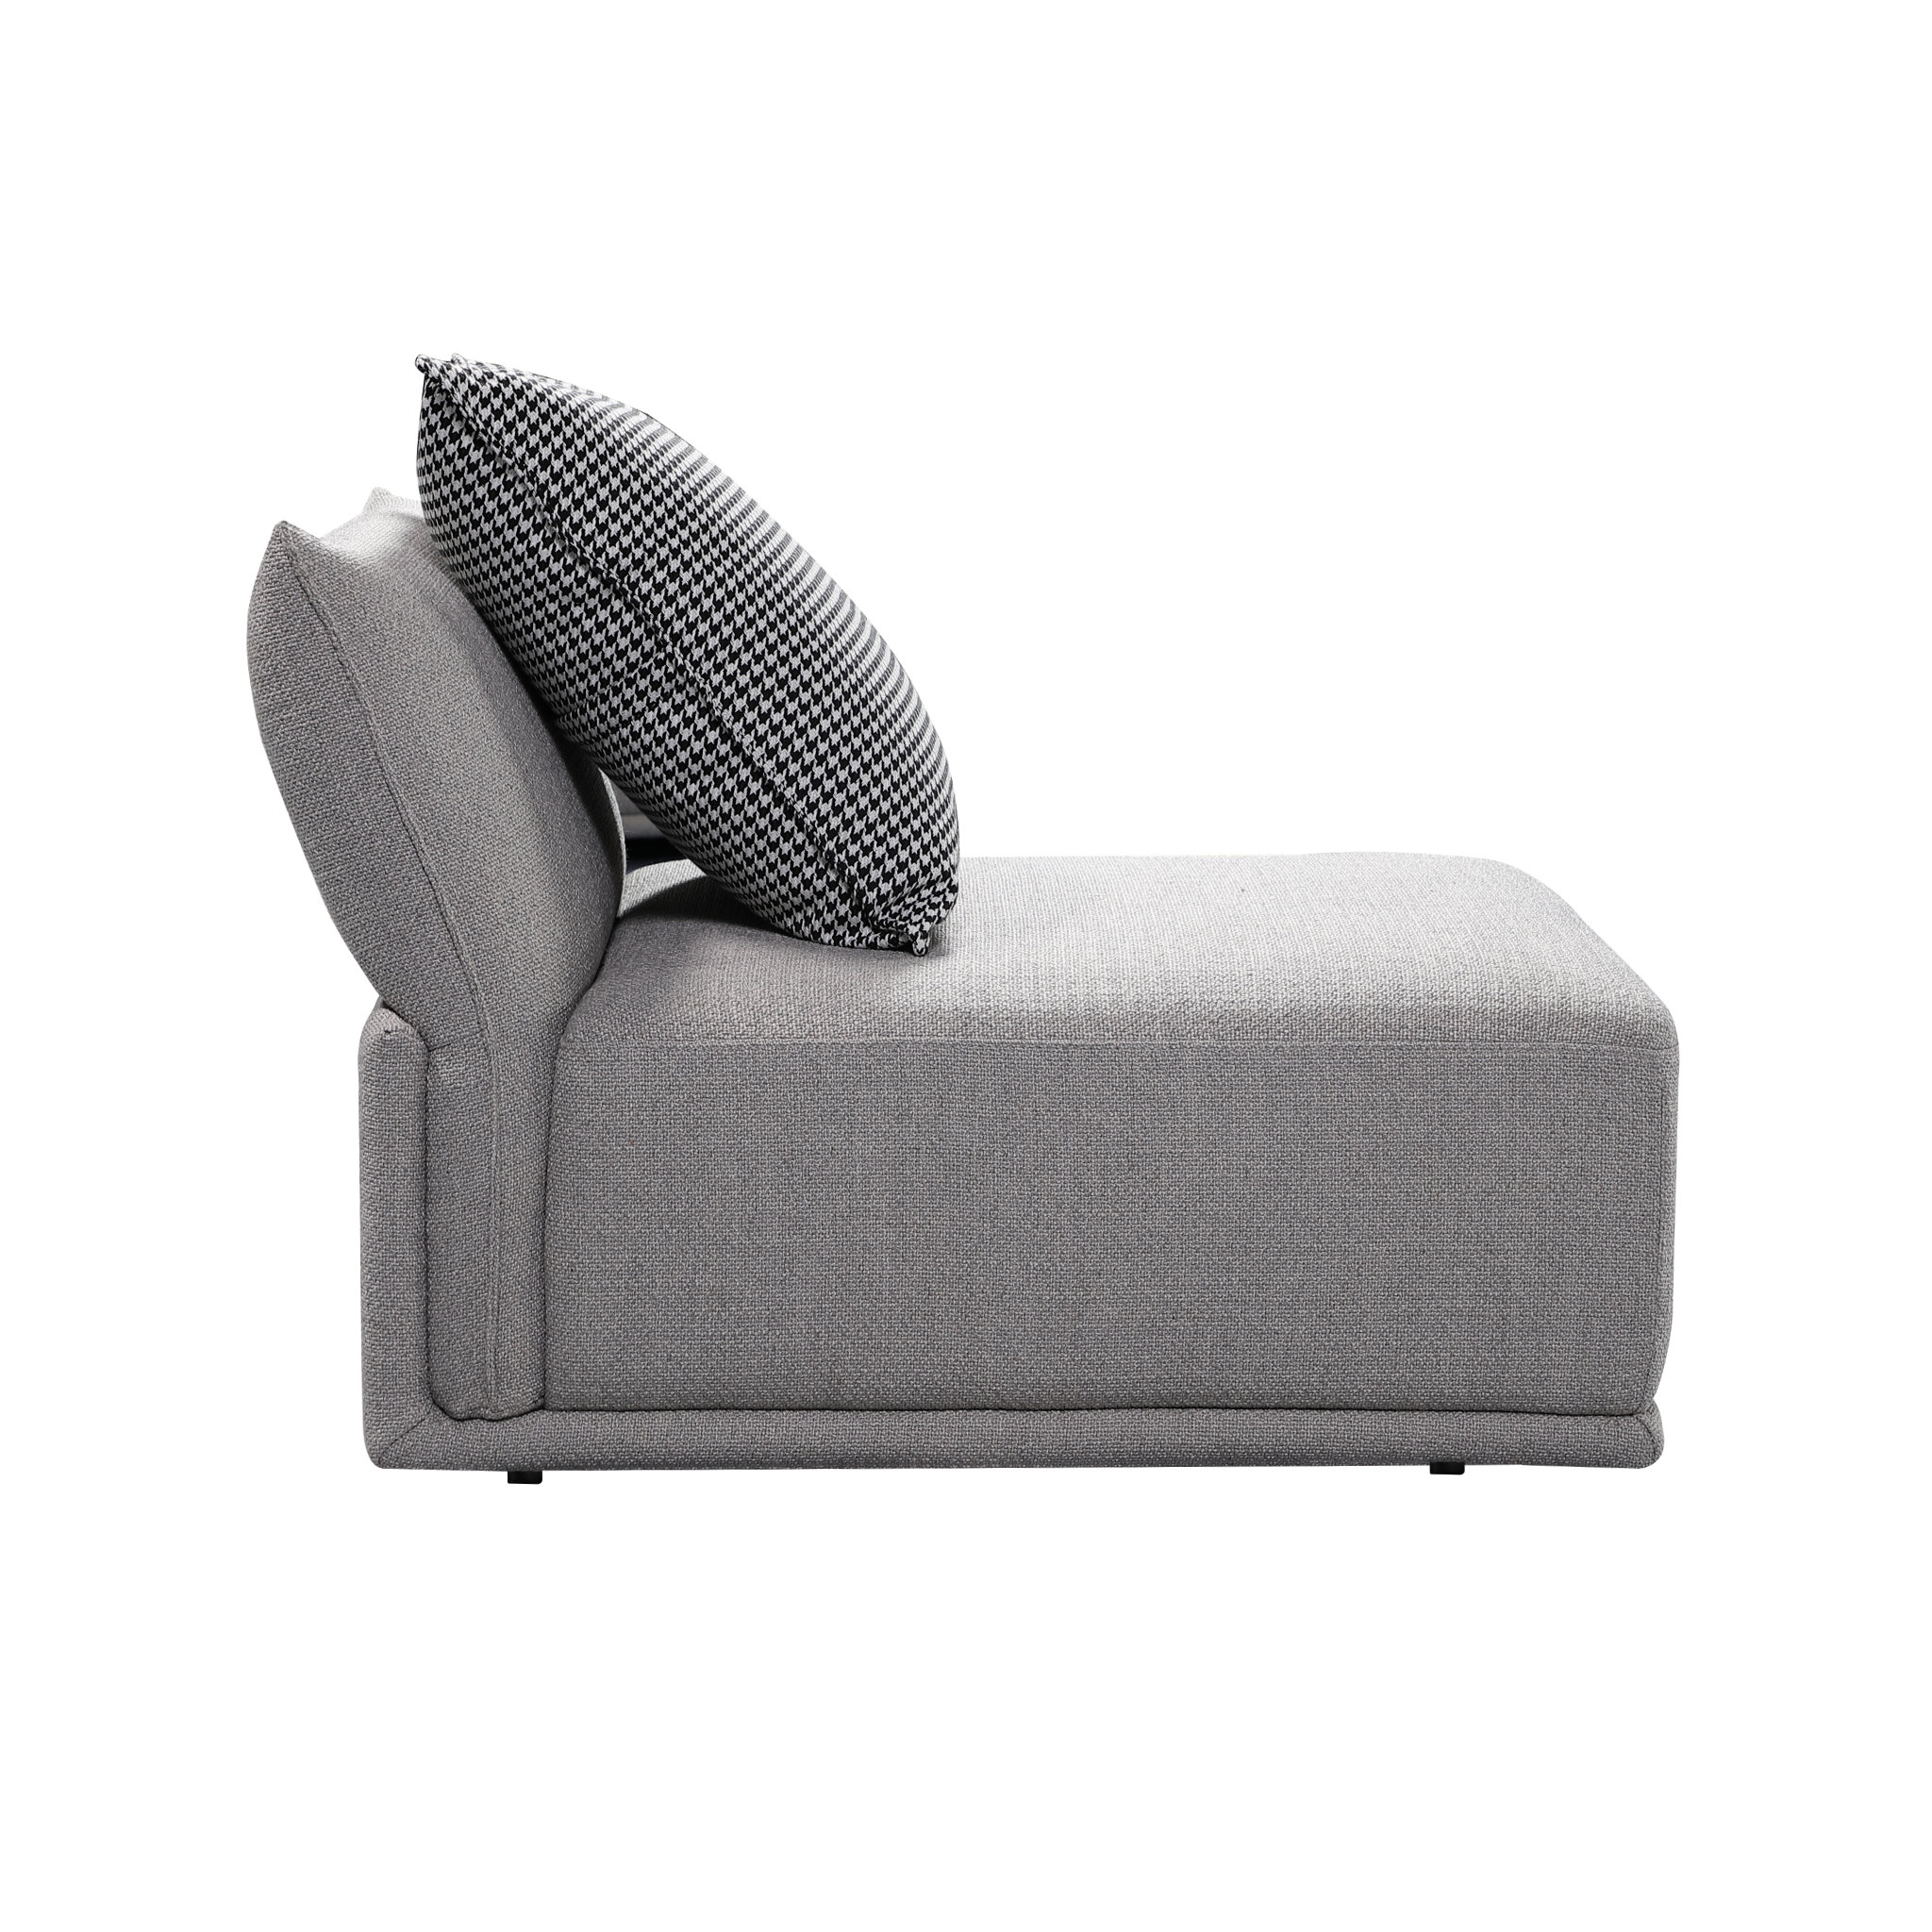 Stratus Sofa Single Modular Seat Expand Furniture Folding Tables Smarter Wall Beds E Savers